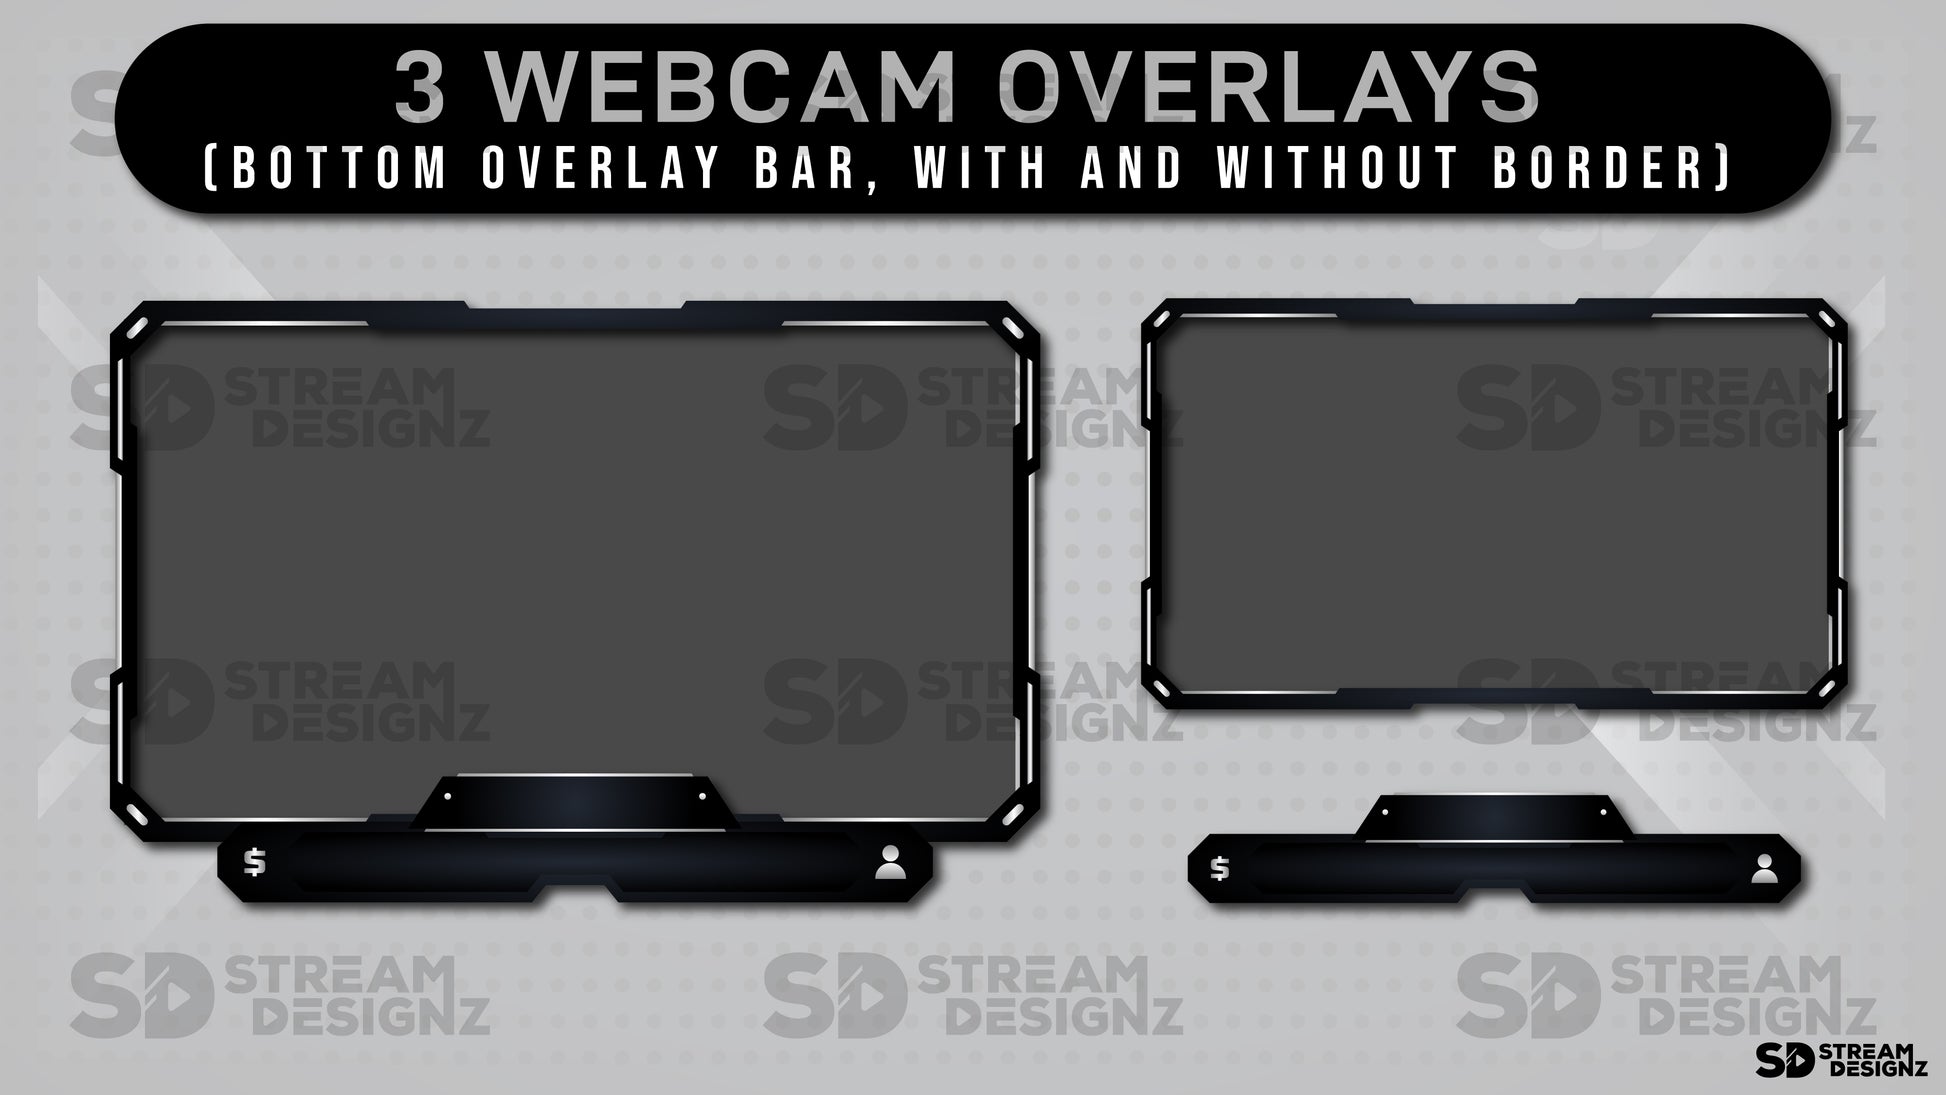 Static stream overlay package monochrome webcam overlays stream designz